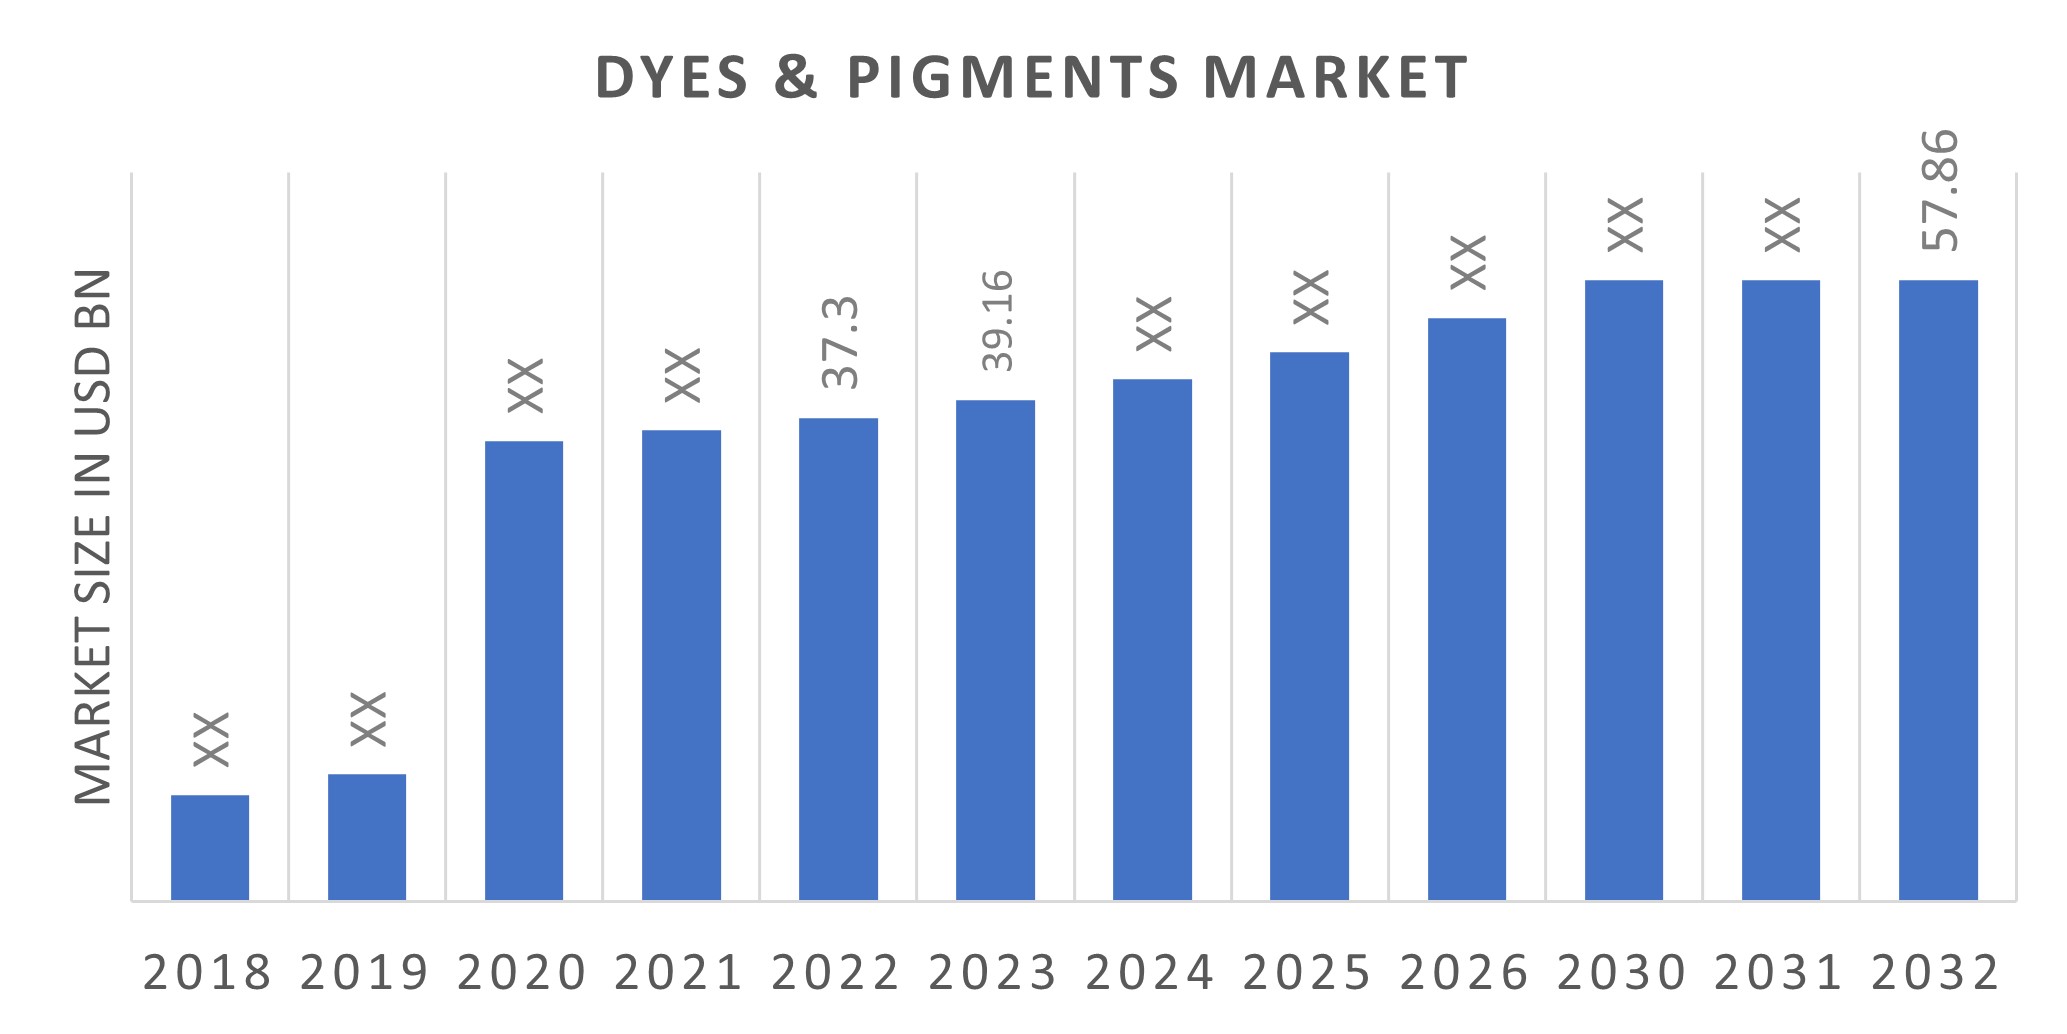 Global Dyes & Pigments Market